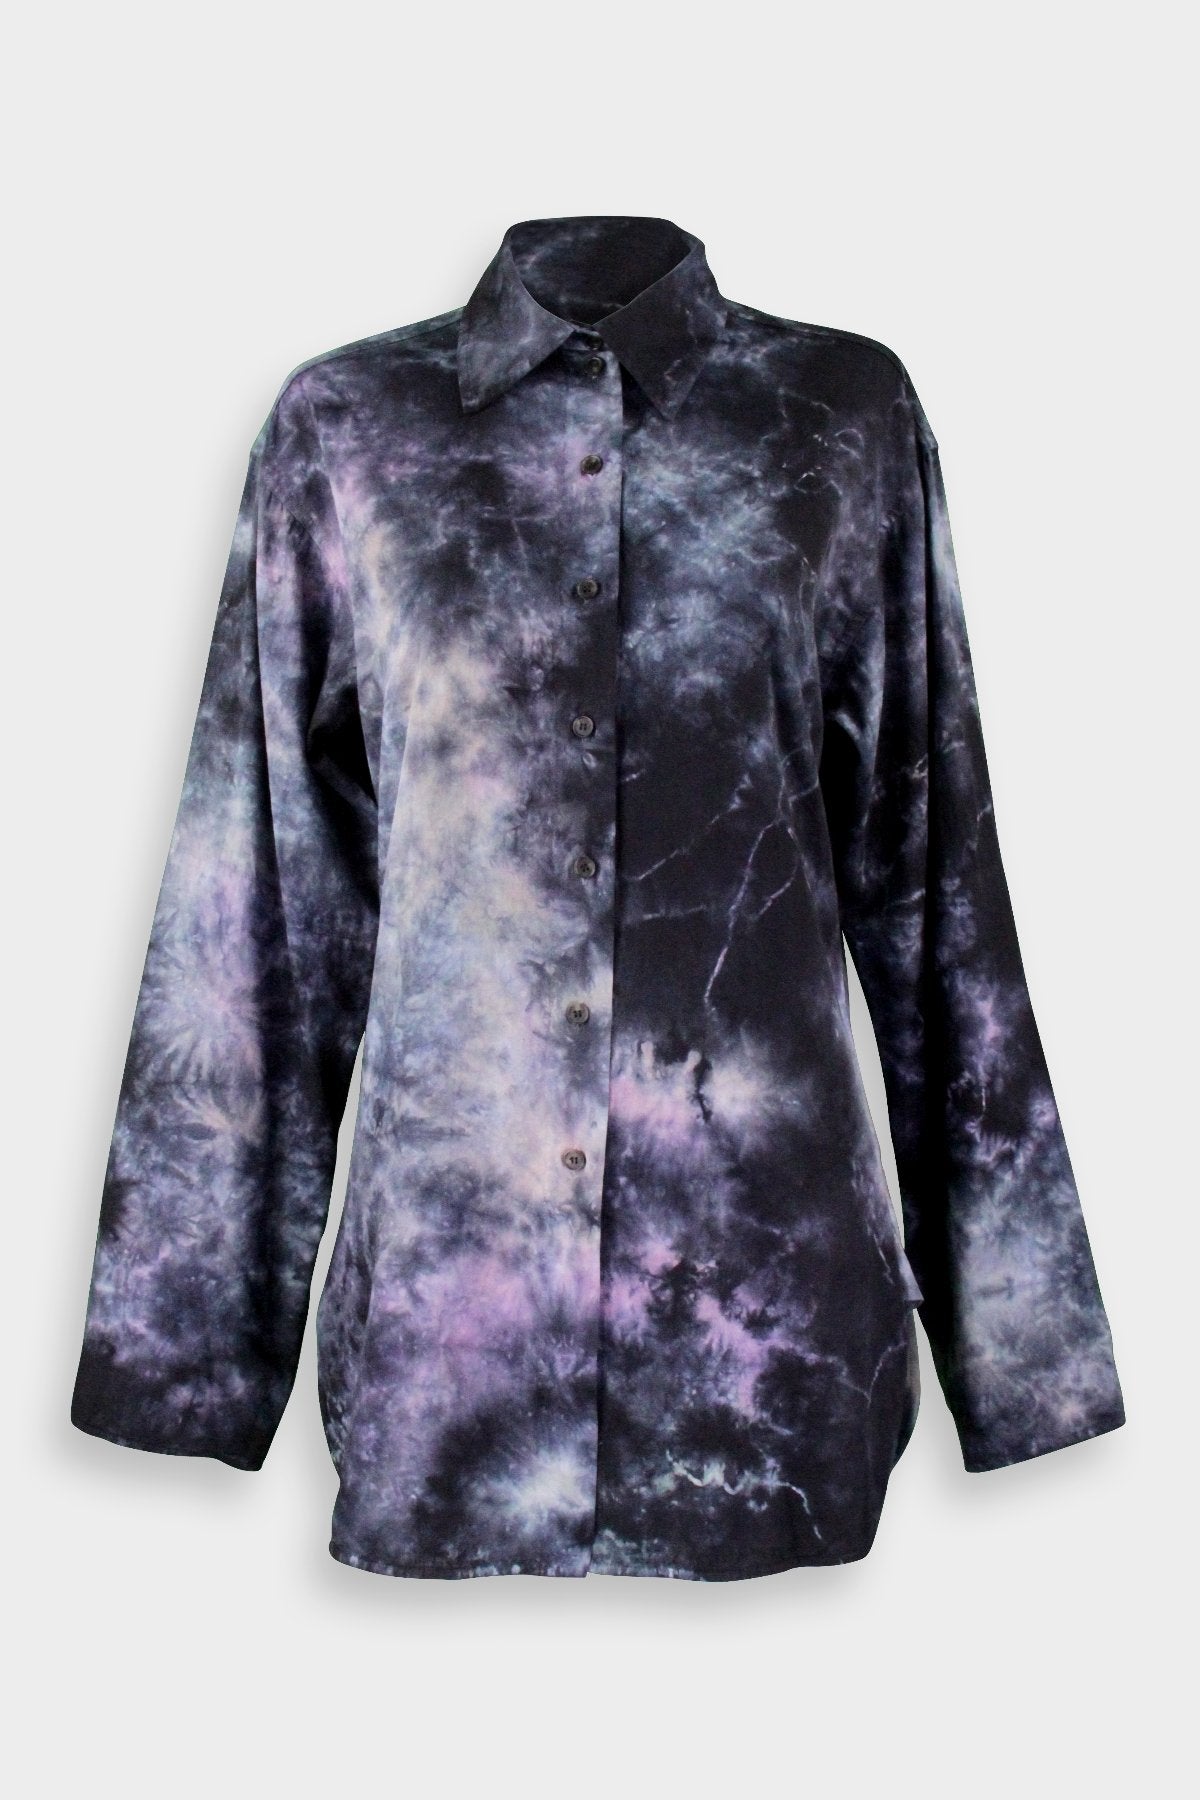 Tie Dye Phoebe Sleeve Button Down Top in Nebula Cloud - shop-olivia.com